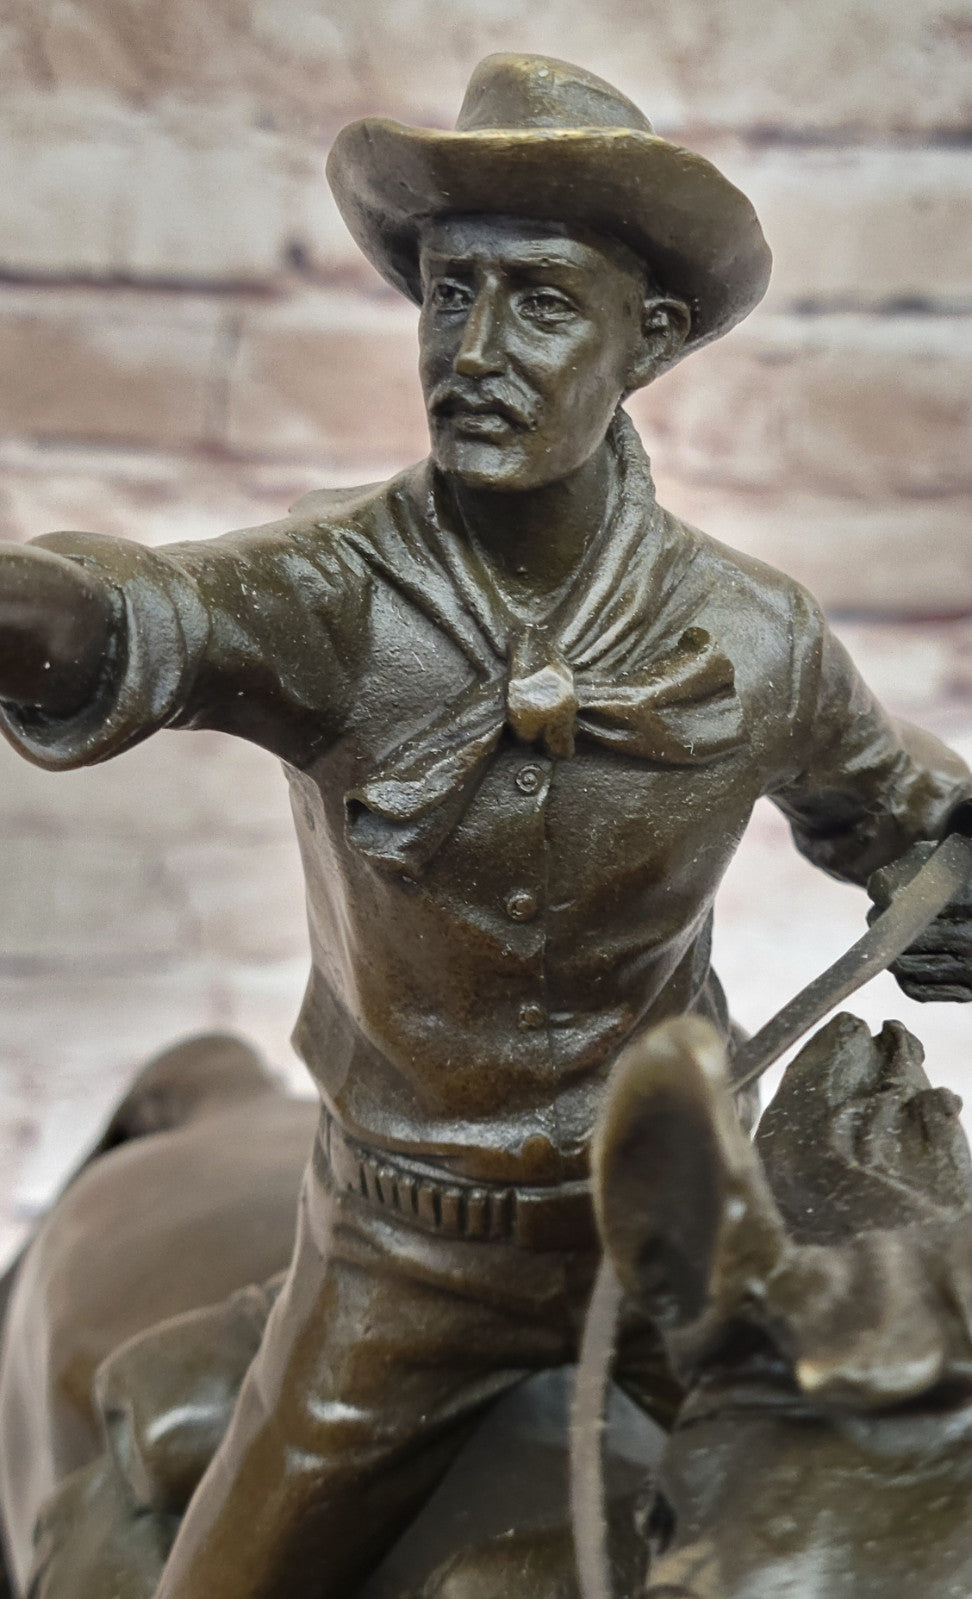 Old School Charm: Karl Kauba`s Cowboy on Horse - Collectible Bronze Artwork